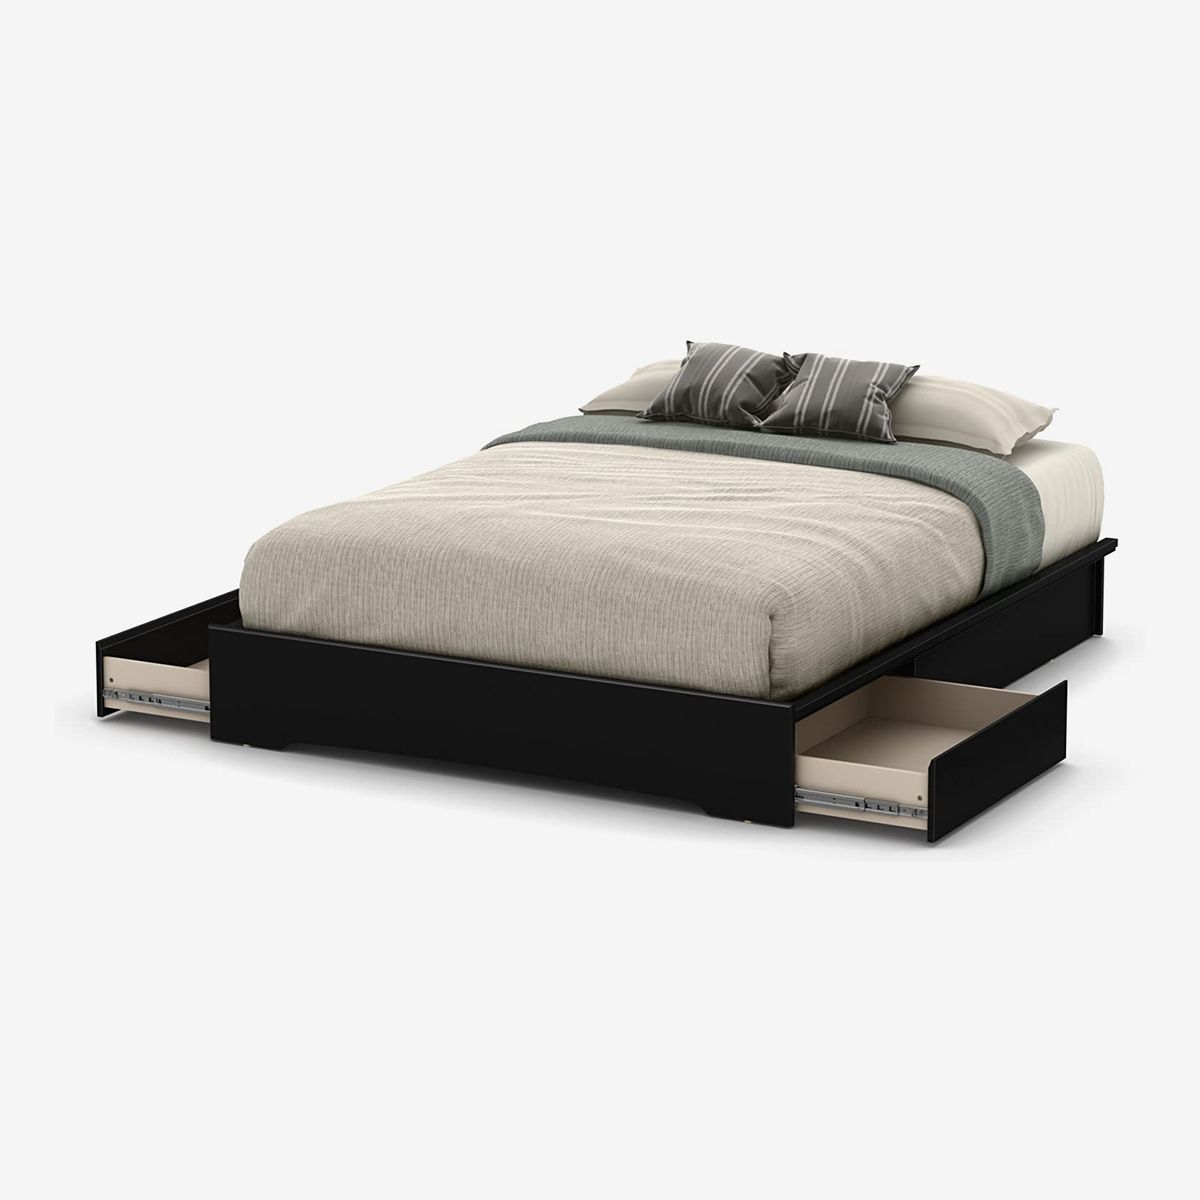 Modern Platform Beds With Storage, Bed Frames With Storage